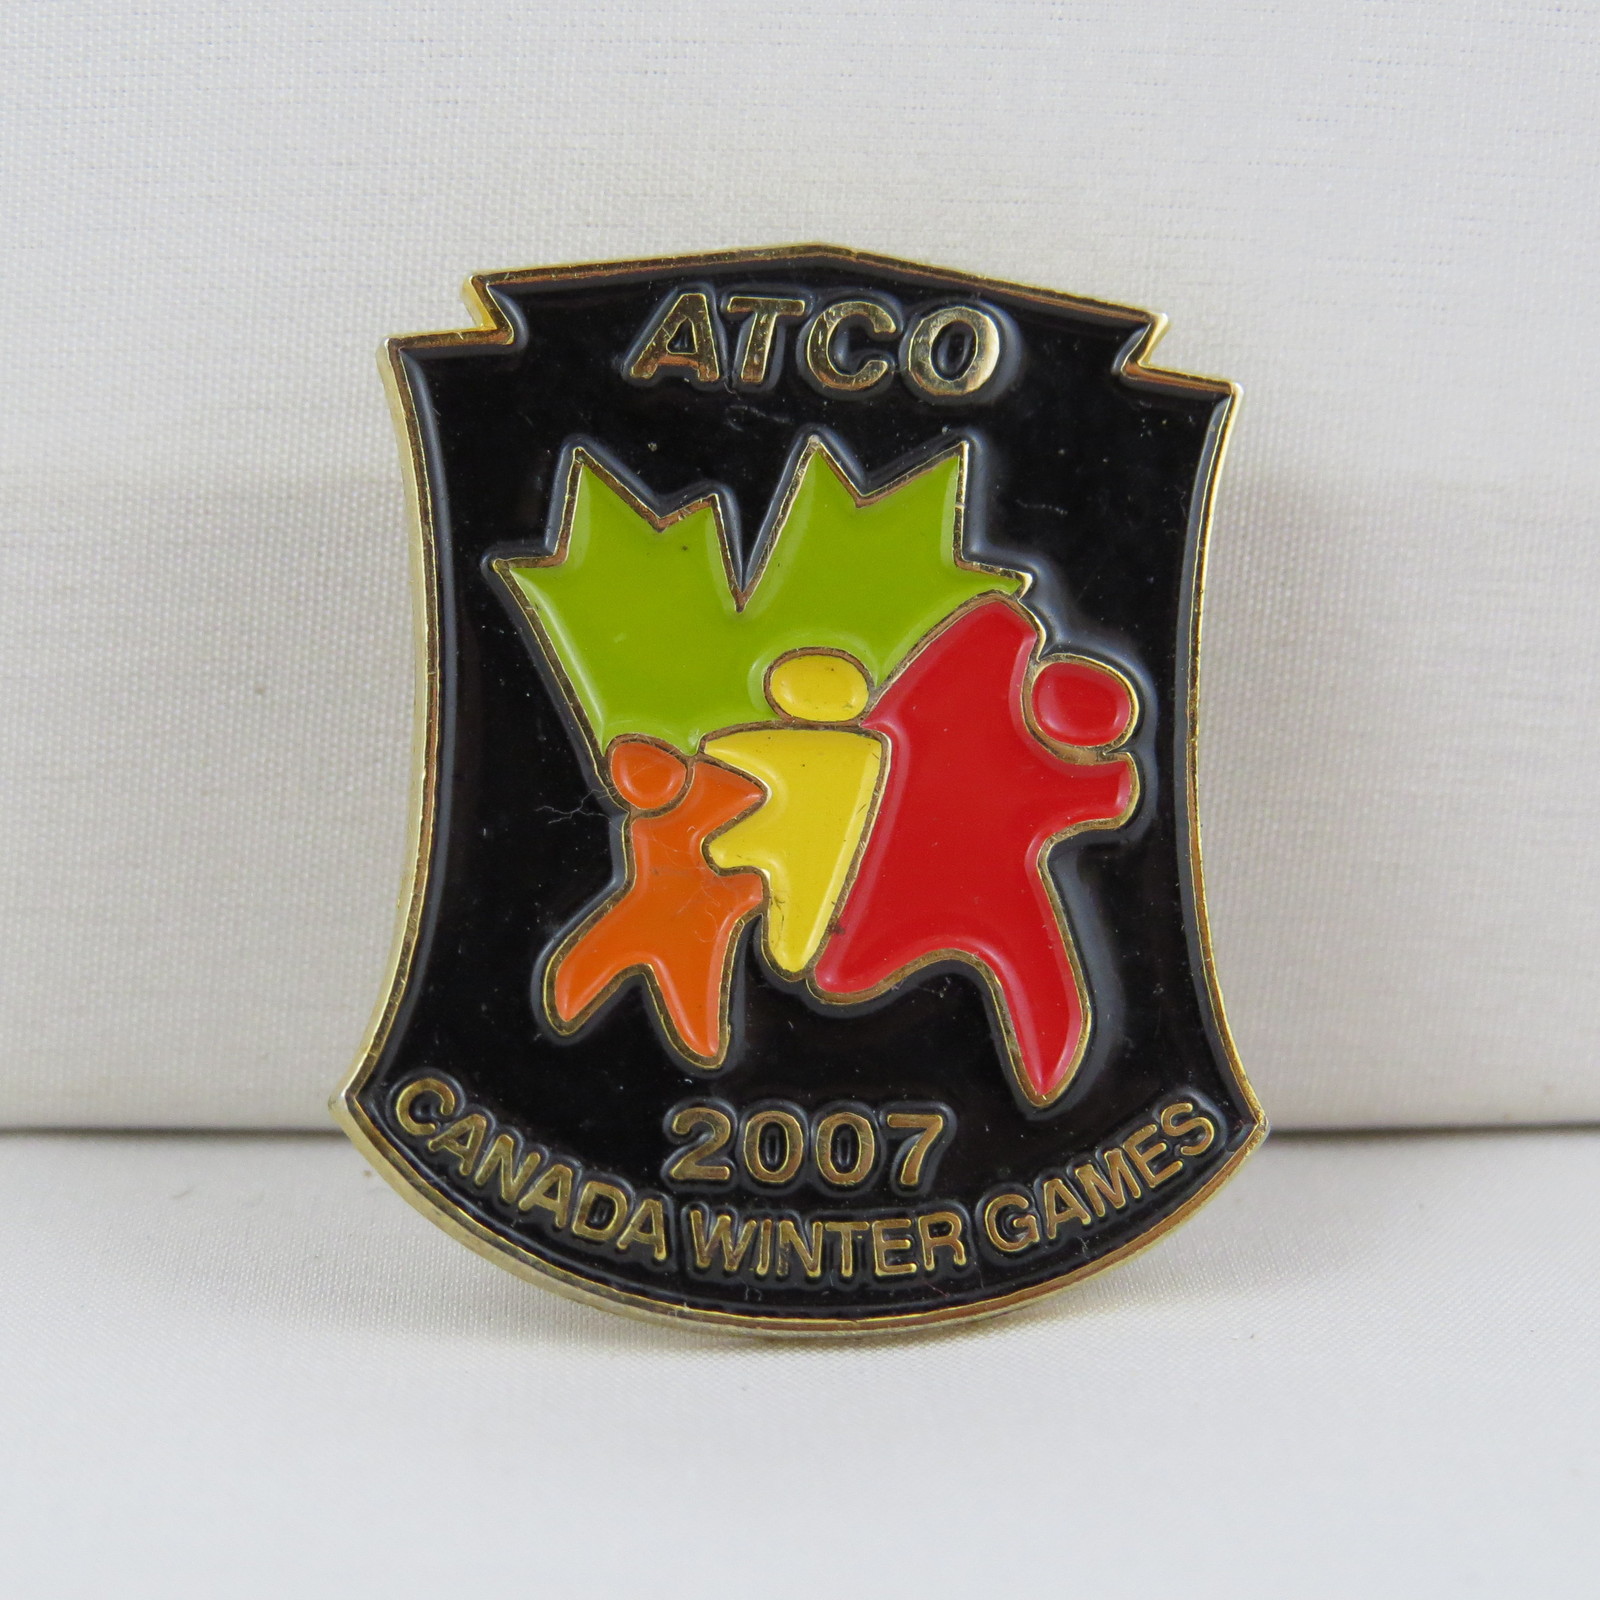 Primary image for Juex Canada Winter Games Pin - 2007 Whitehorse Yukon - Atco Sponsor Pin